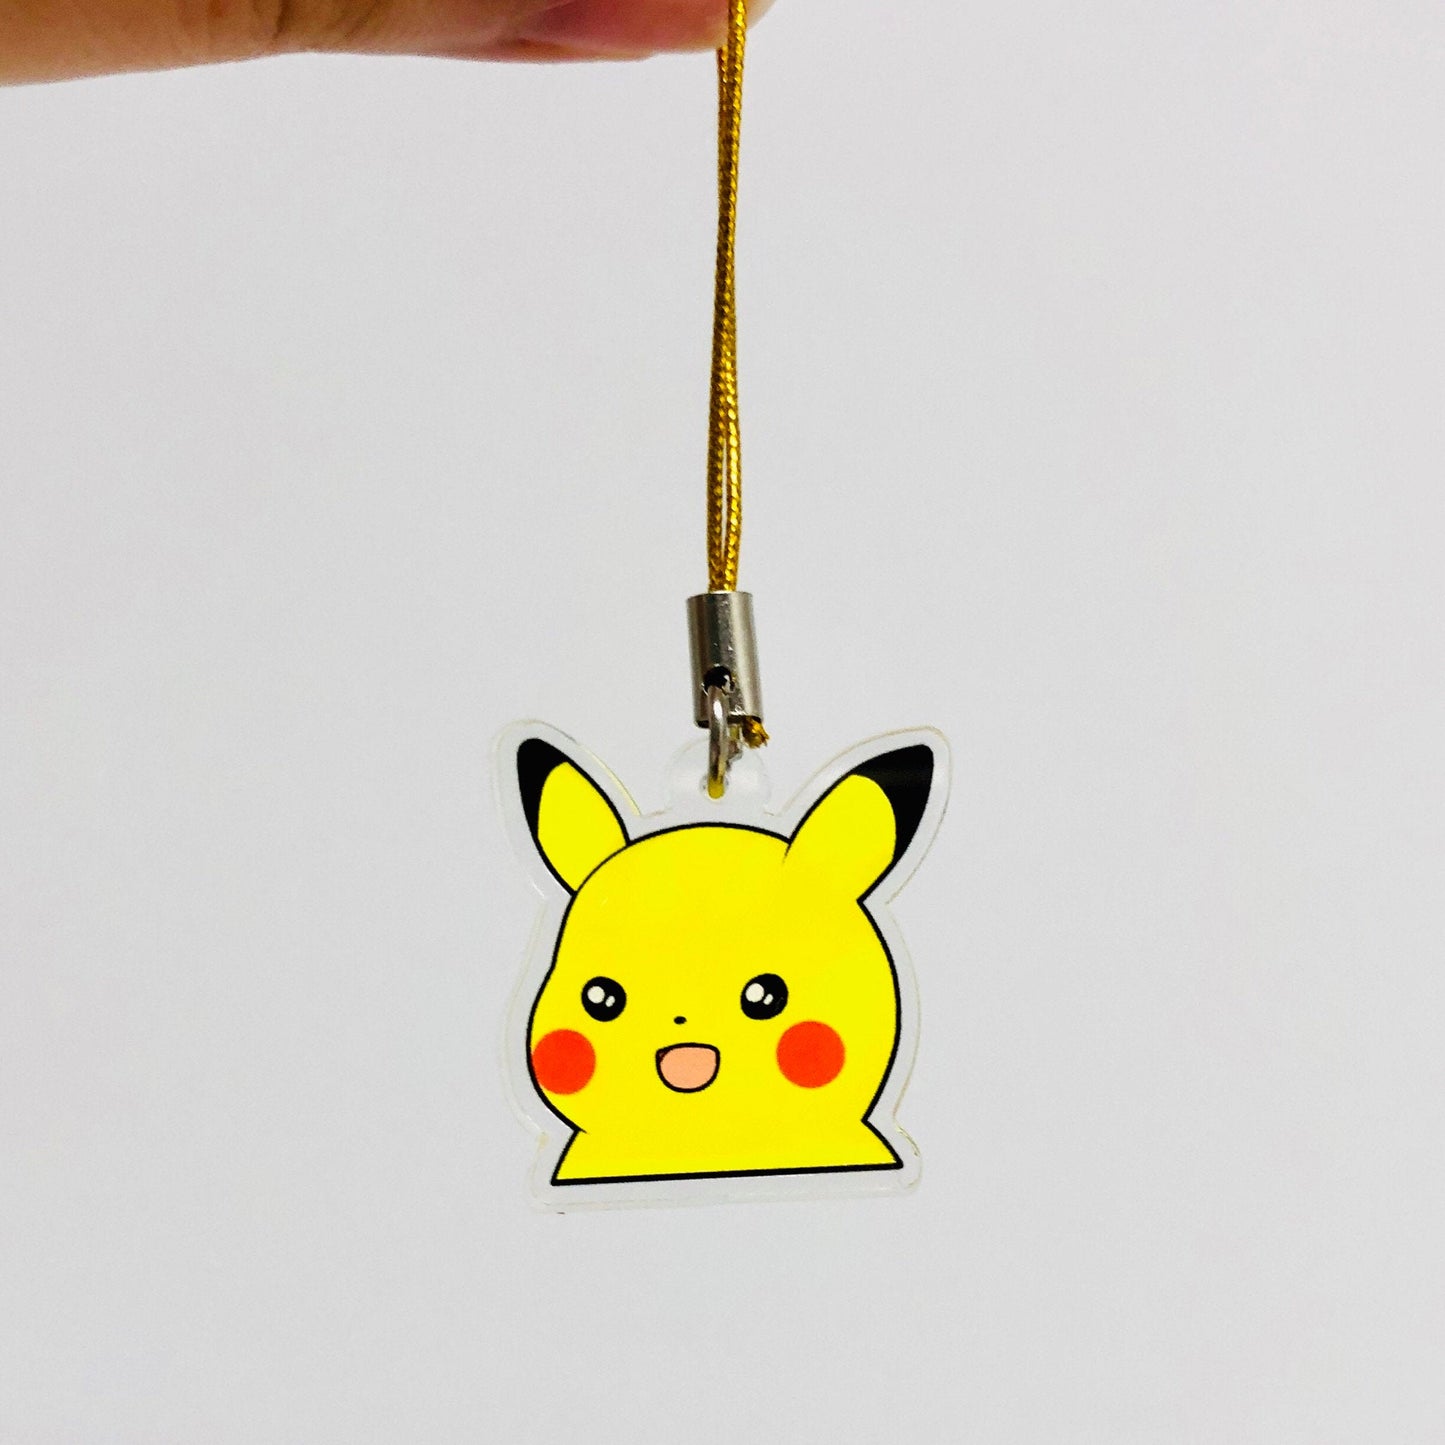 Surprised Pikachu Meme Double-sided acrylic charm